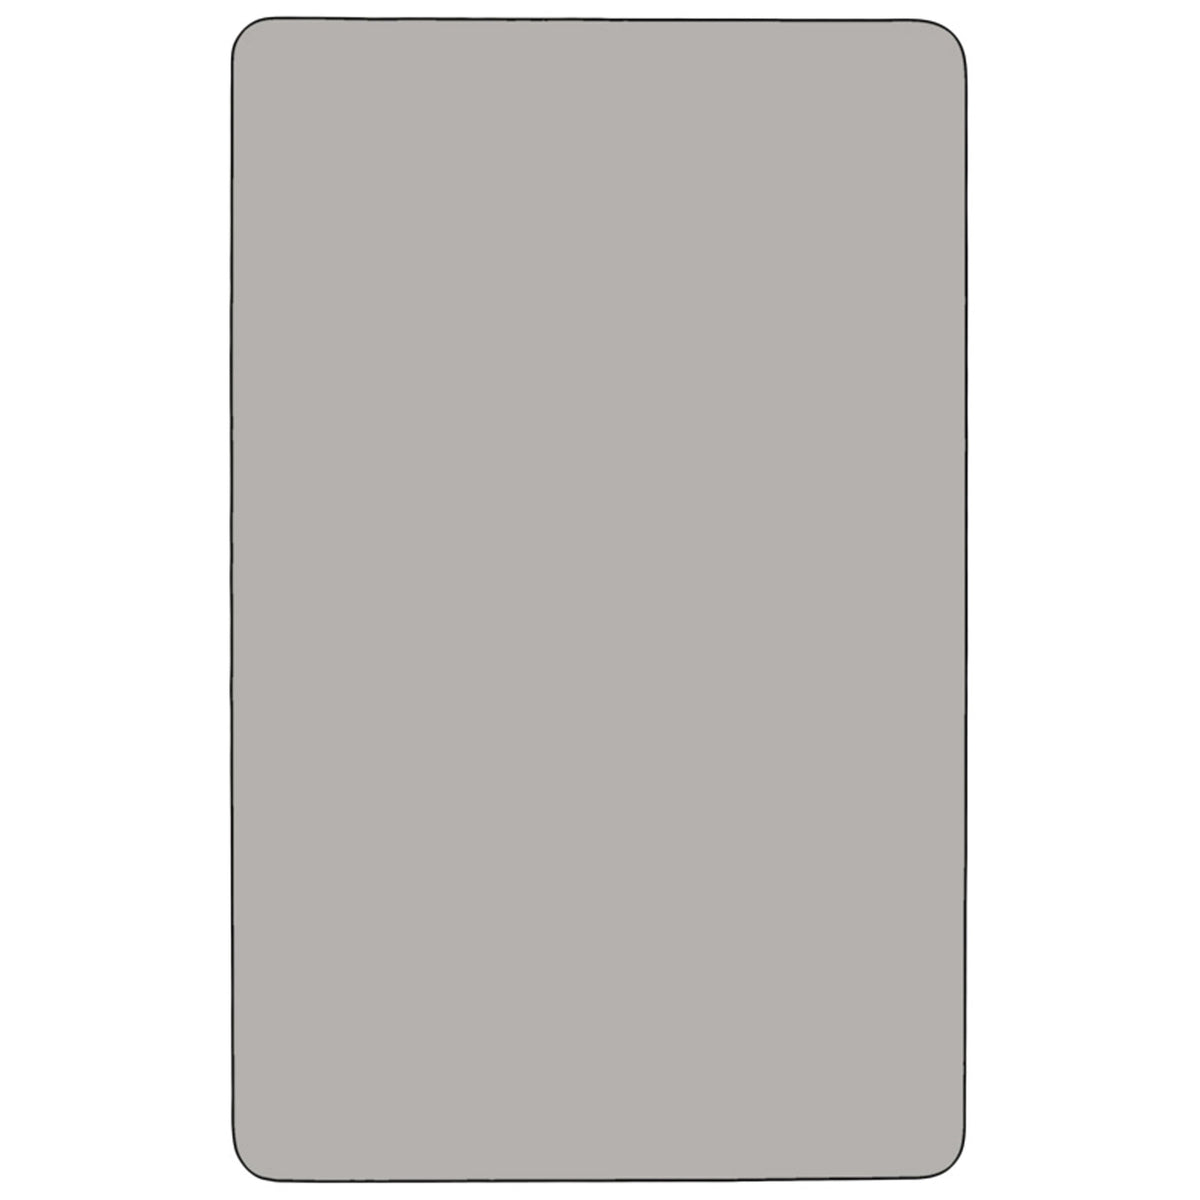 Gray |#| Mobile 36inchW x 72inchL Rectangular Grey HP Laminate Adjustable Activity Table